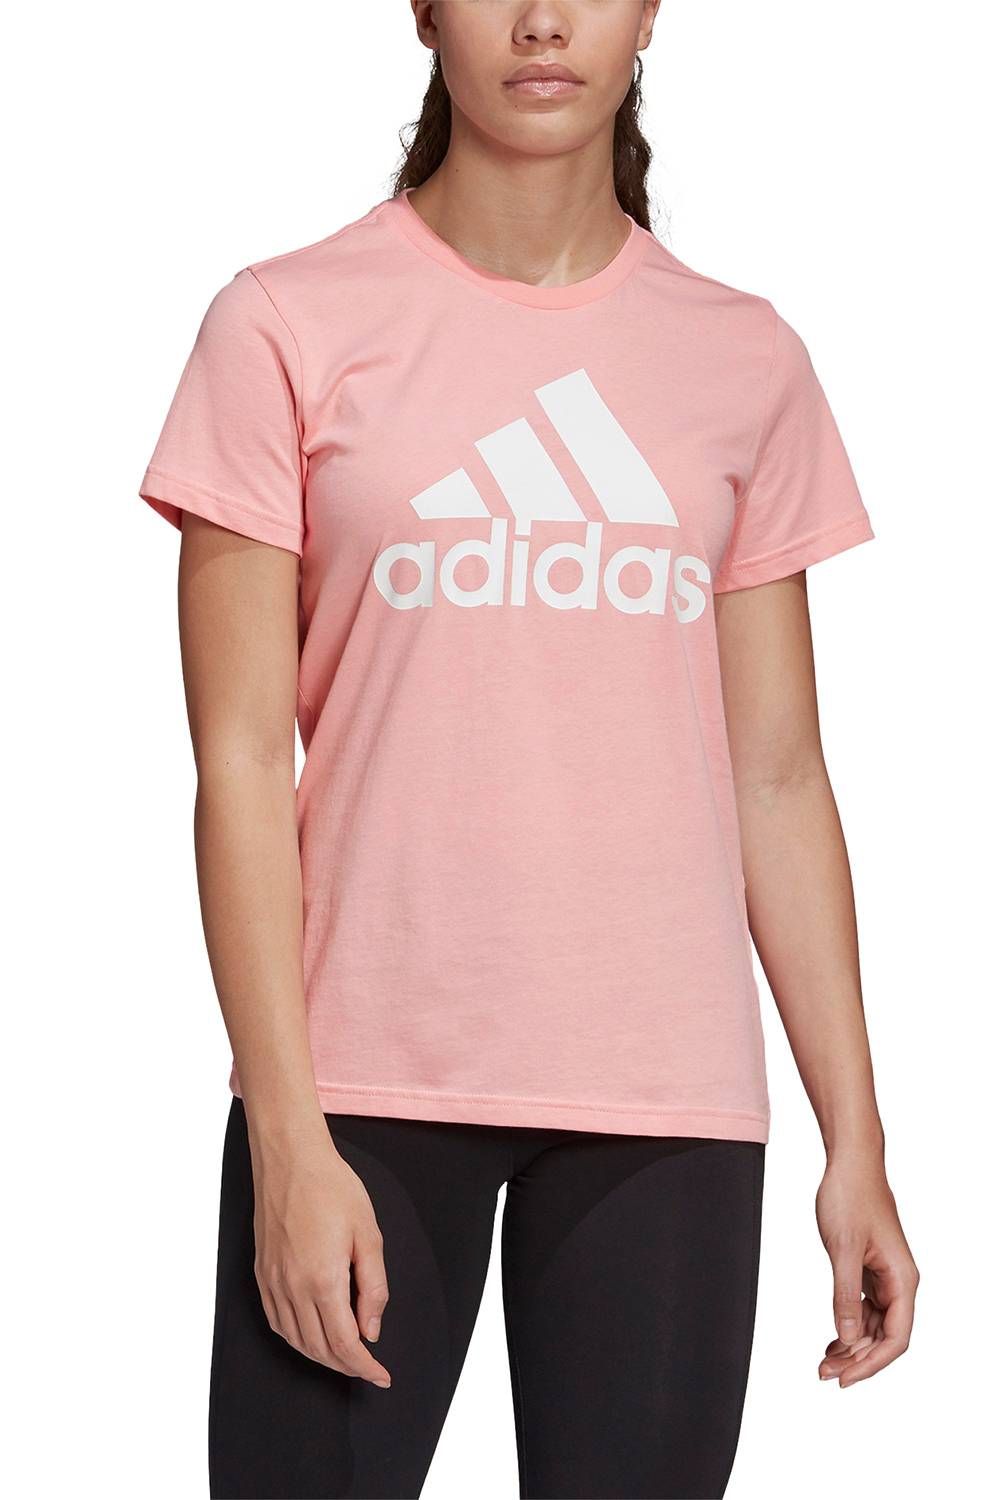 ADIDAS - Polera Sports T-Shirts Mujer Adidas